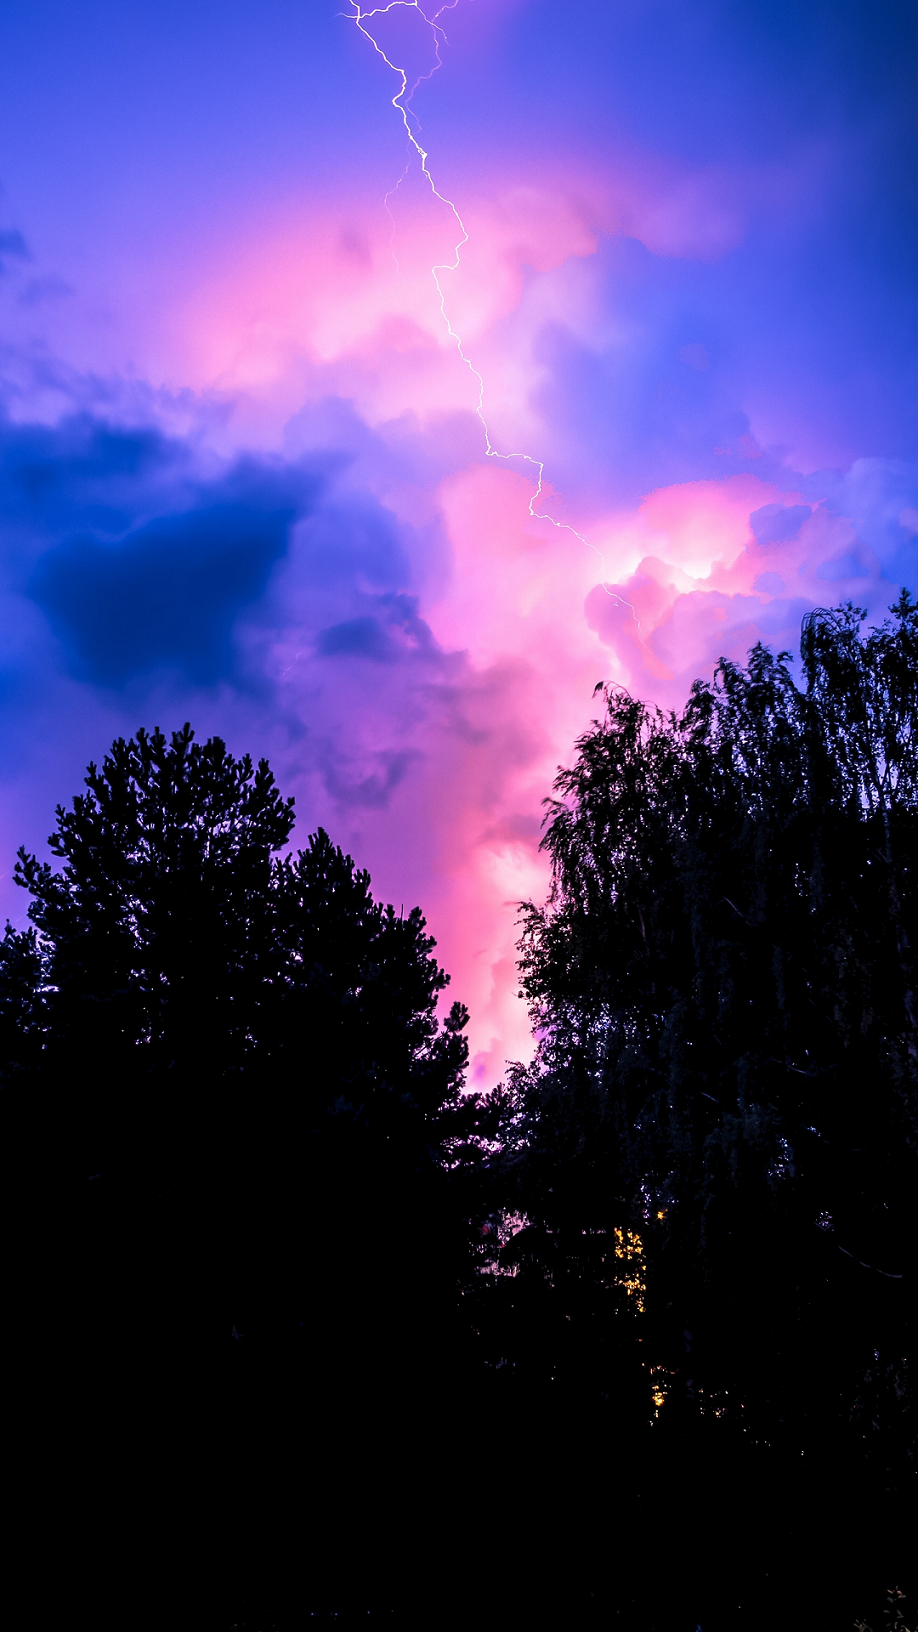 OLED-wallpaper-idownloadblog-trees-lightning-clouds